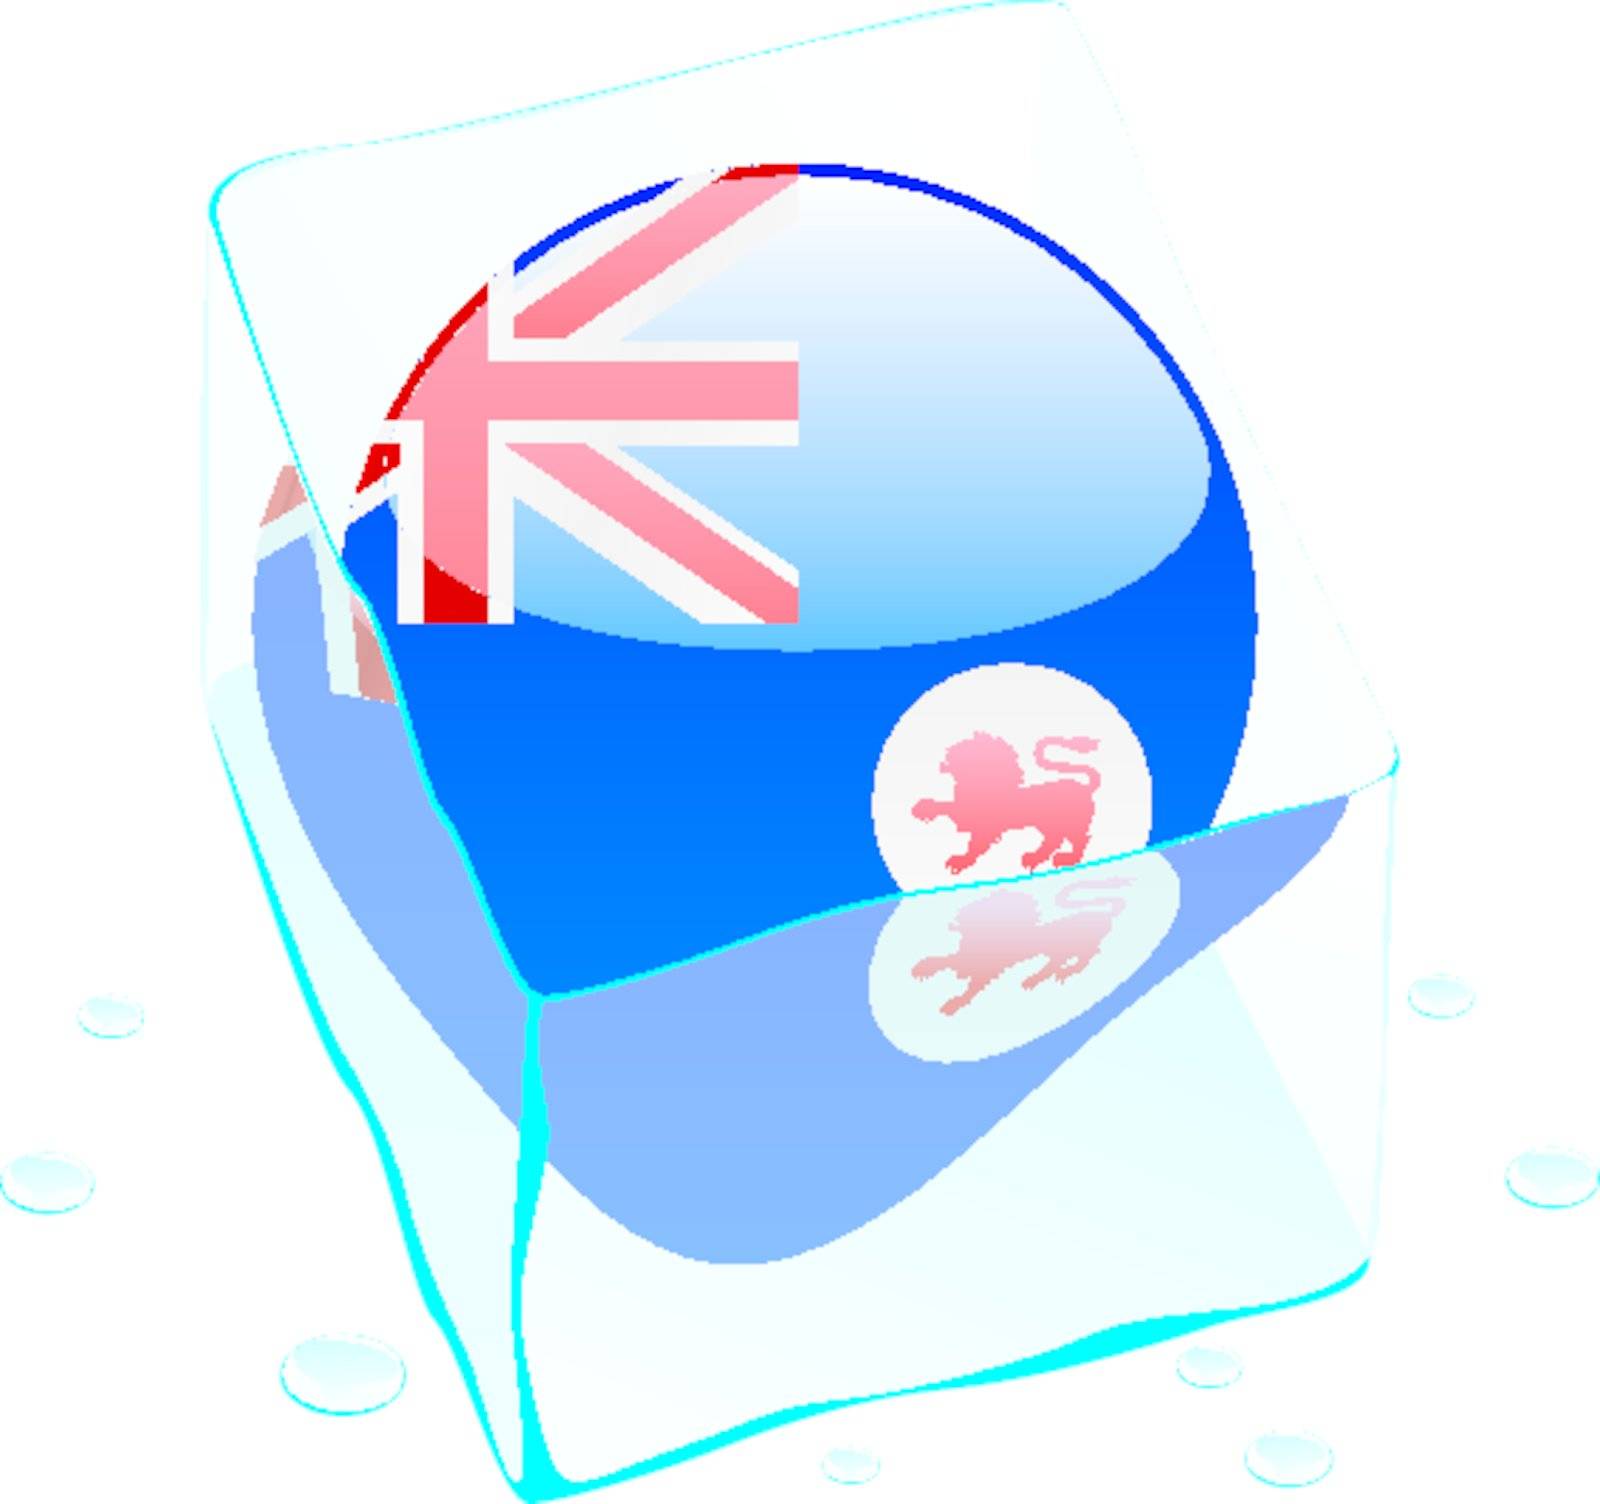 fully editable vector illustration of tasmania button flag frozen in ice cube